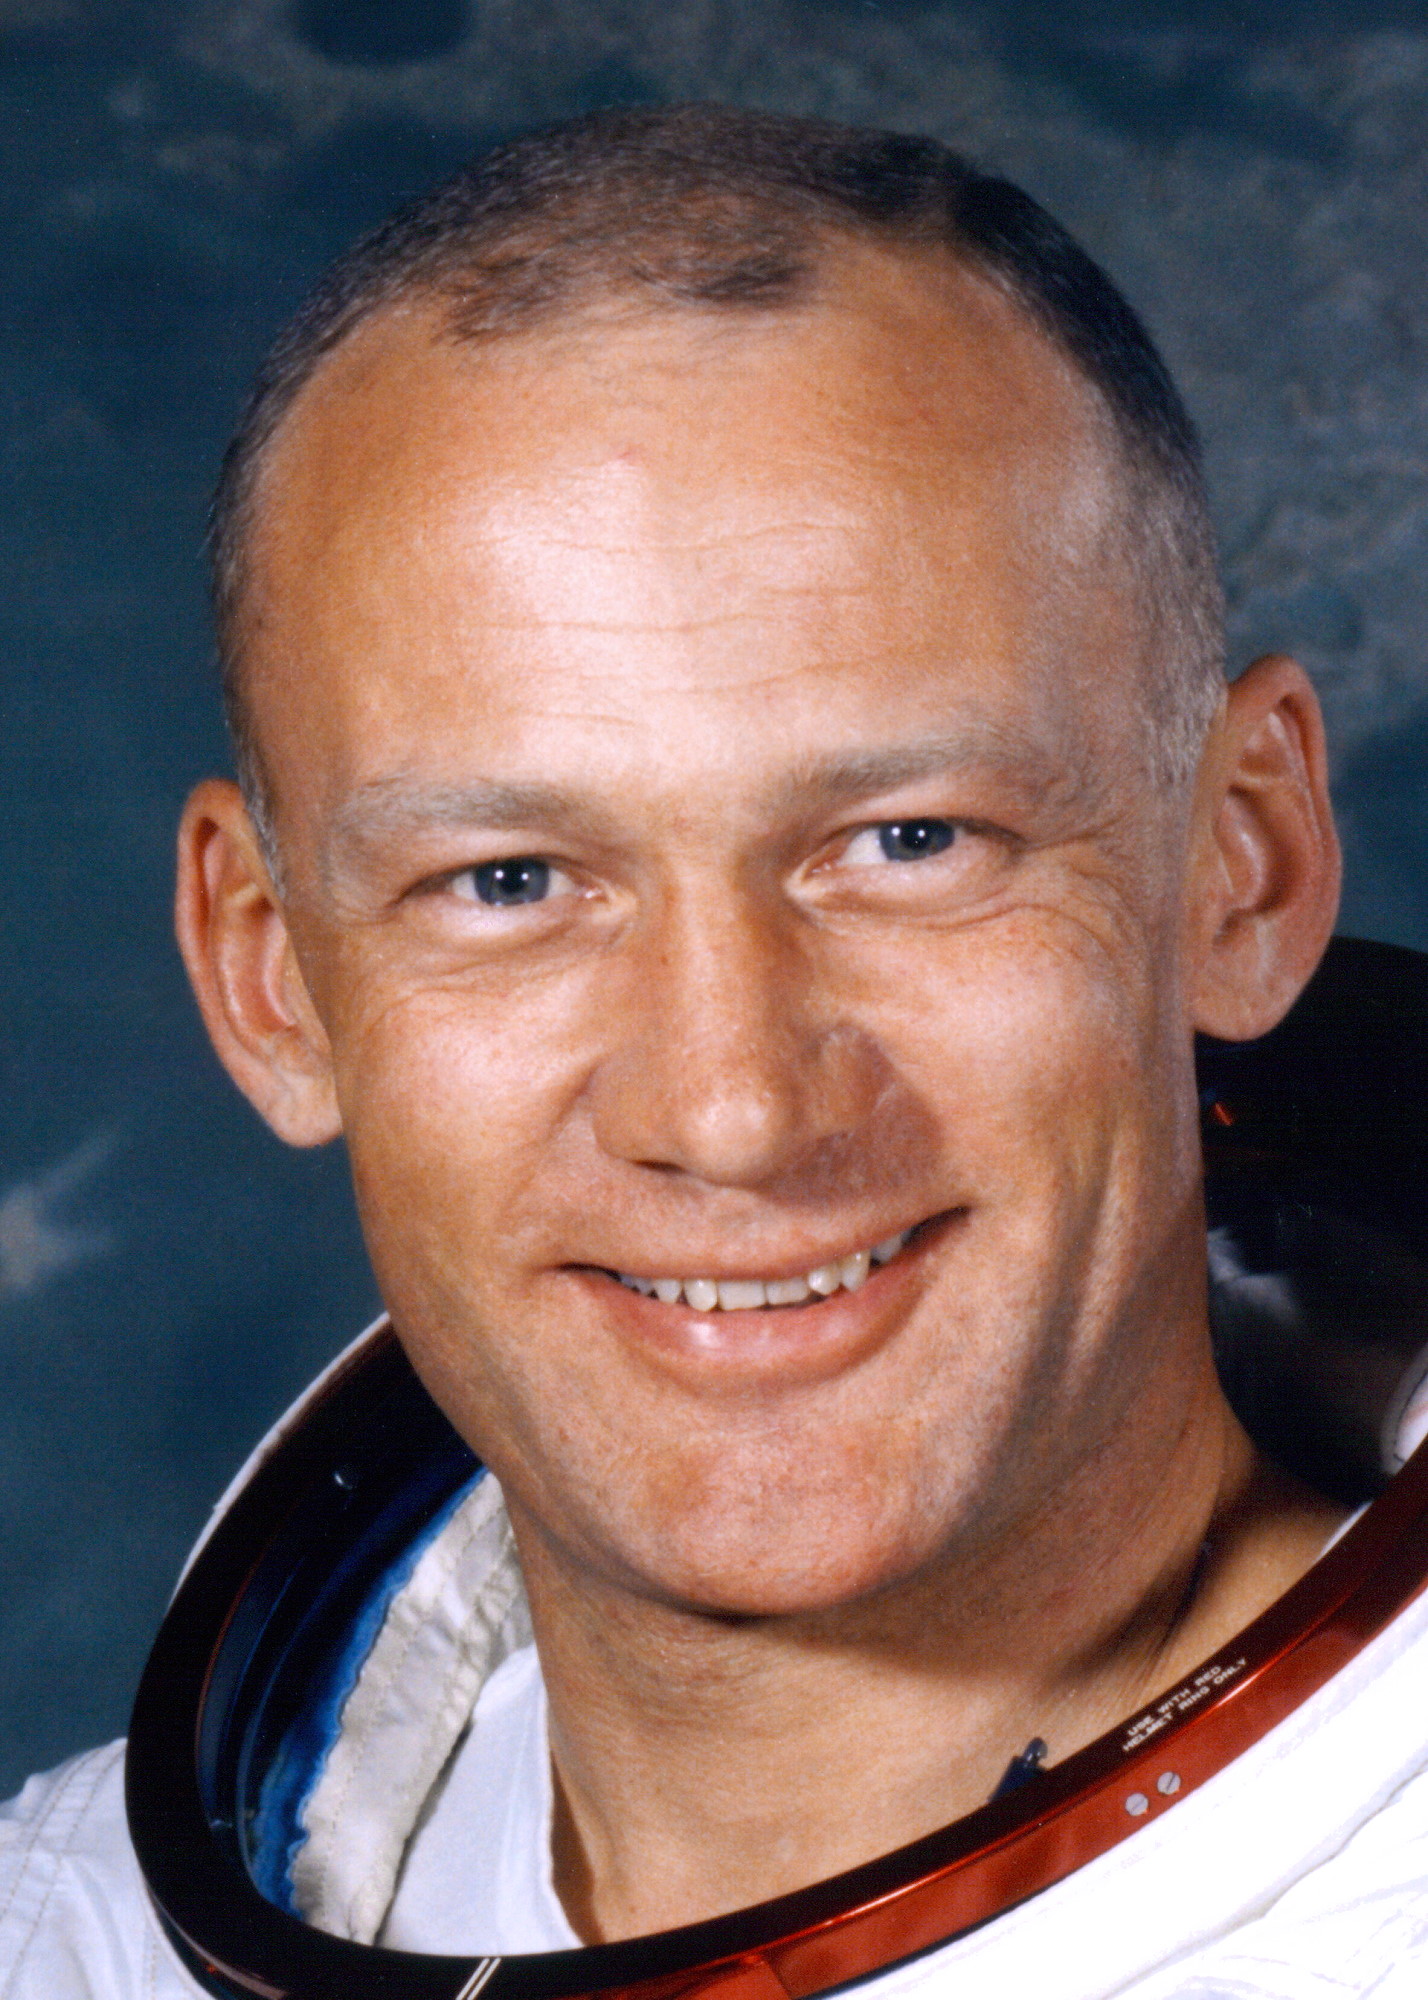 Astronaut Biography: Edwin Buzz Aldrin